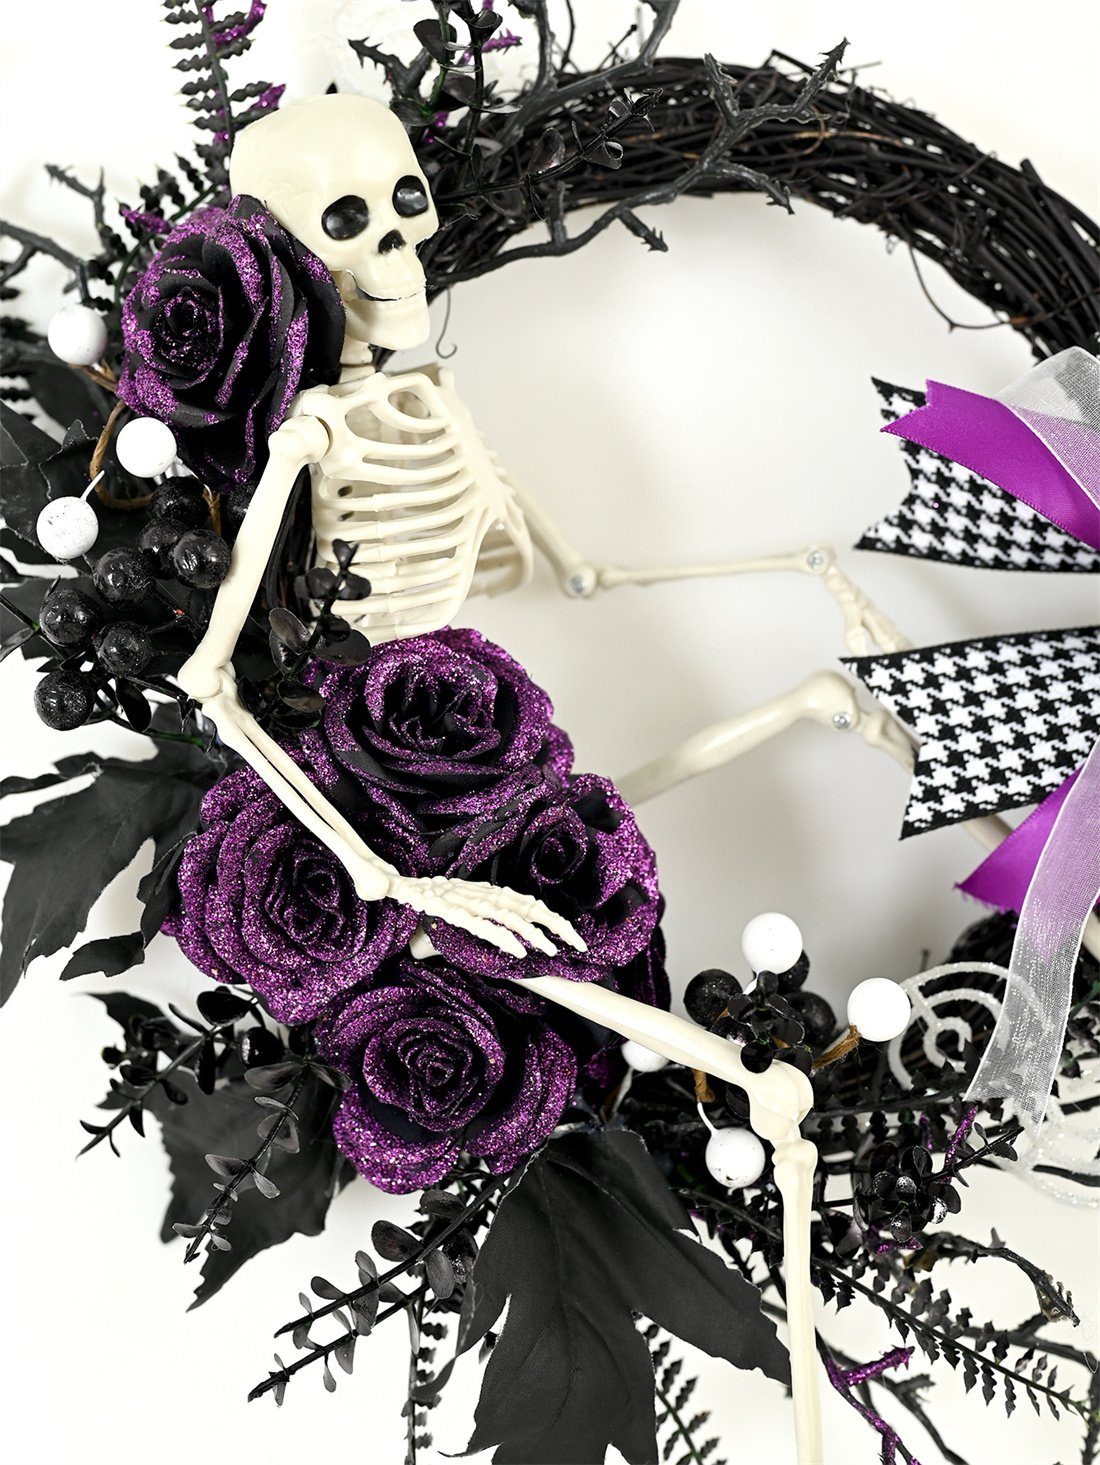 Up DÖRÖY Halloween-Skelett-Anhänger, Kunstgirlande Dress Party Kranz, Schleife hängen, Tür